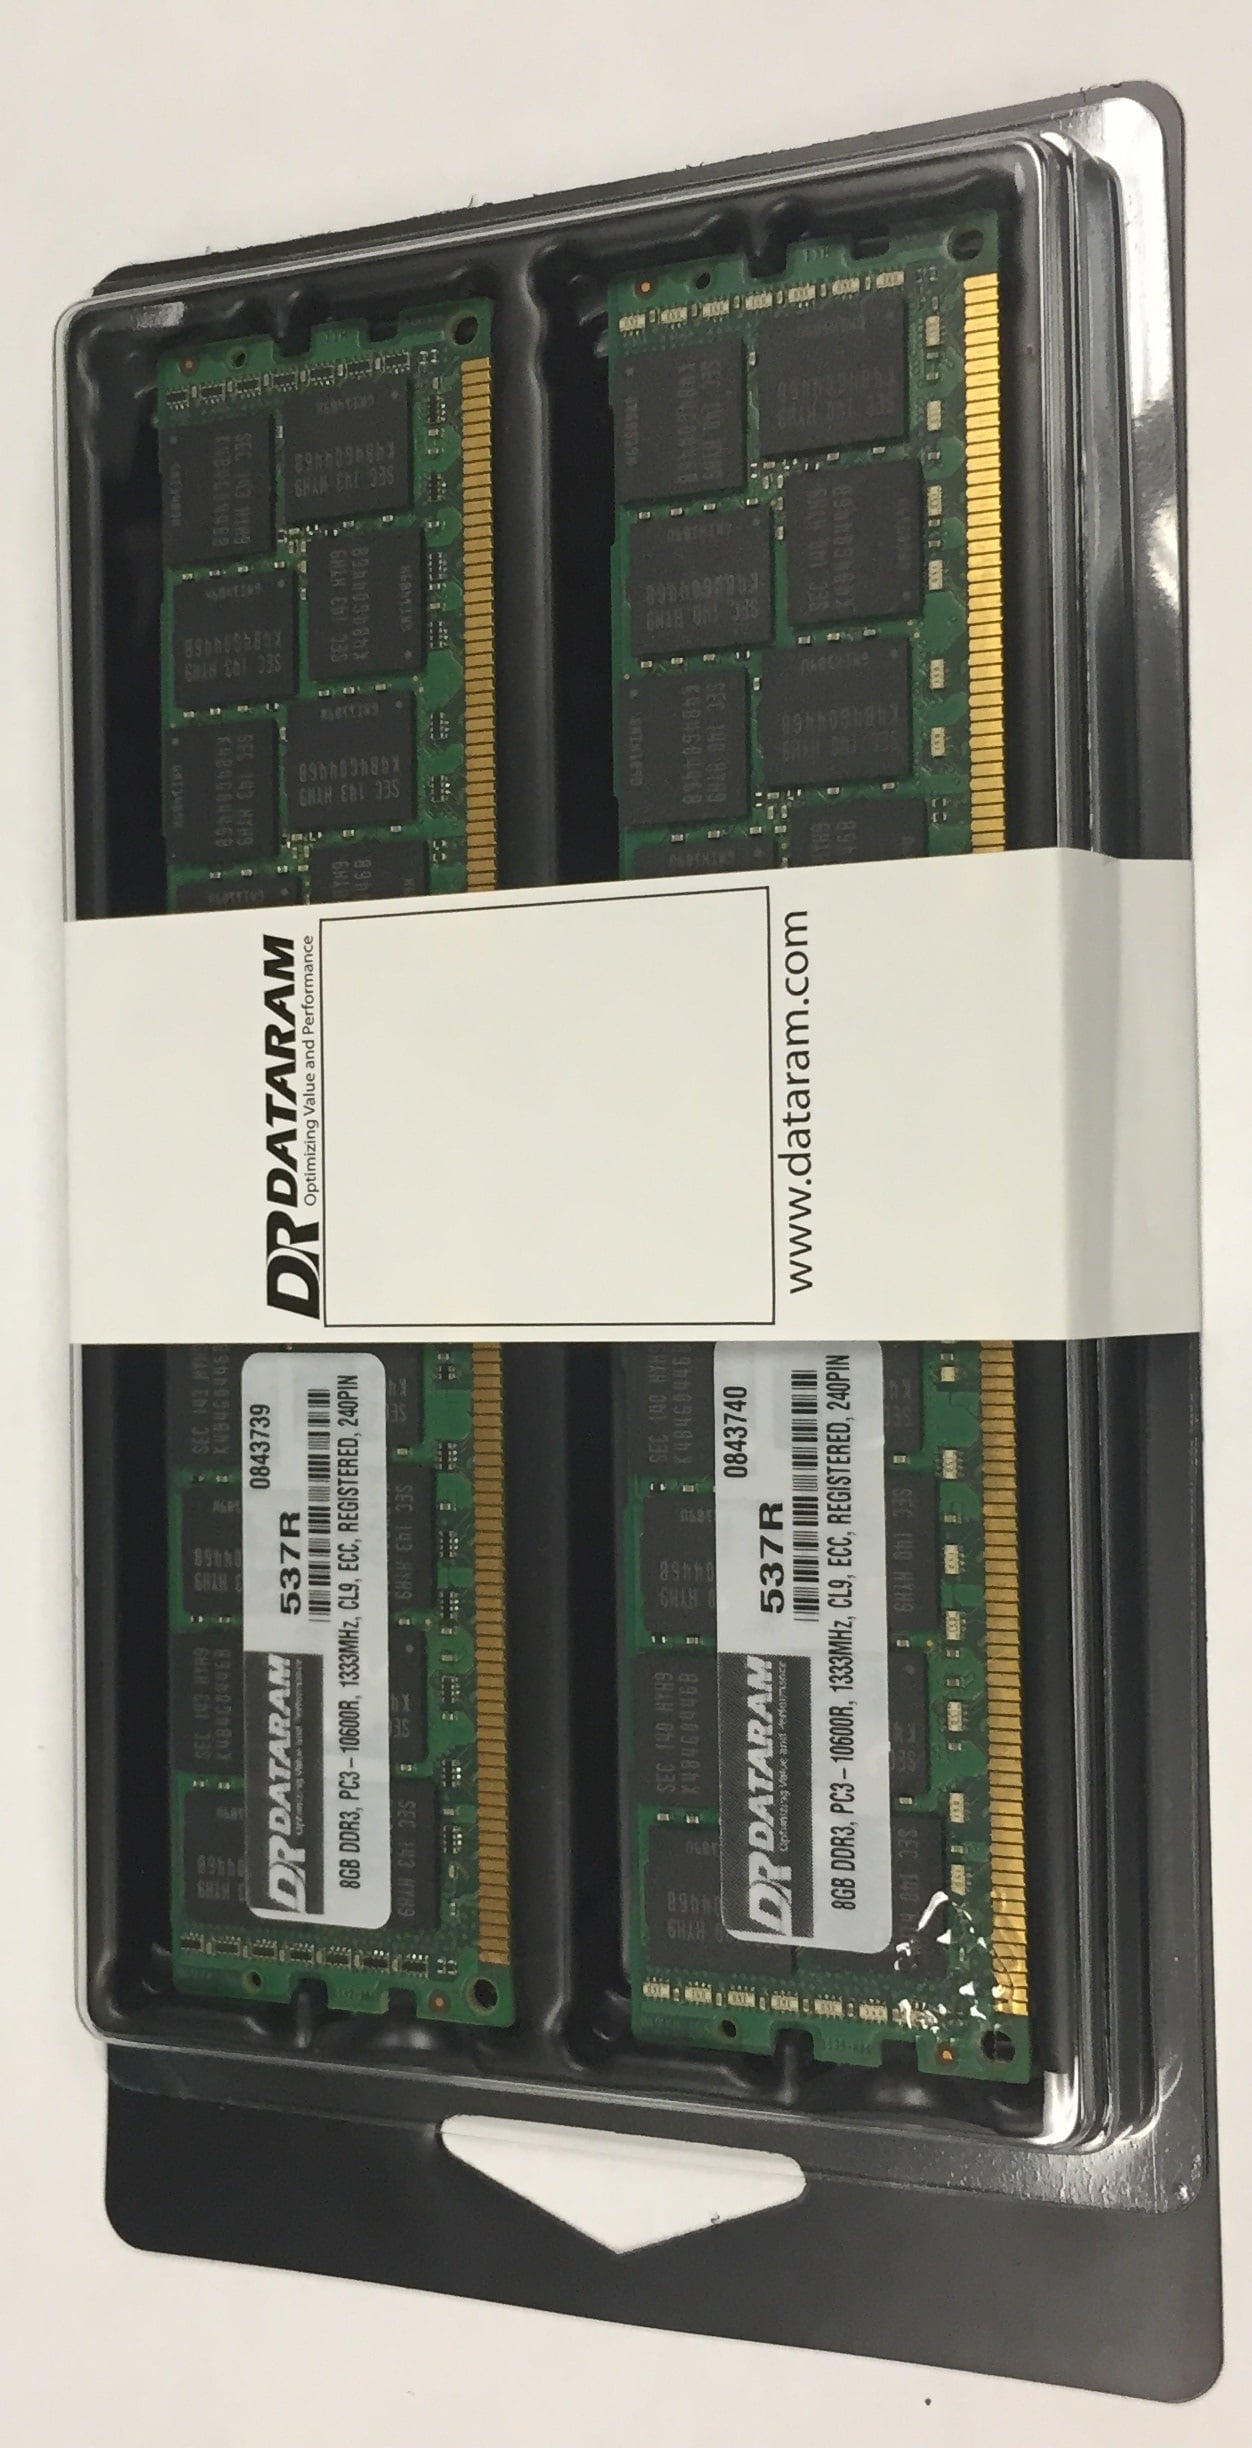 PC3-10600 4GB ECC Registered Rank 1 RAM Memory Upgrade Kit for The Dell Poweredge R410 2x2GB DDR3-1333 